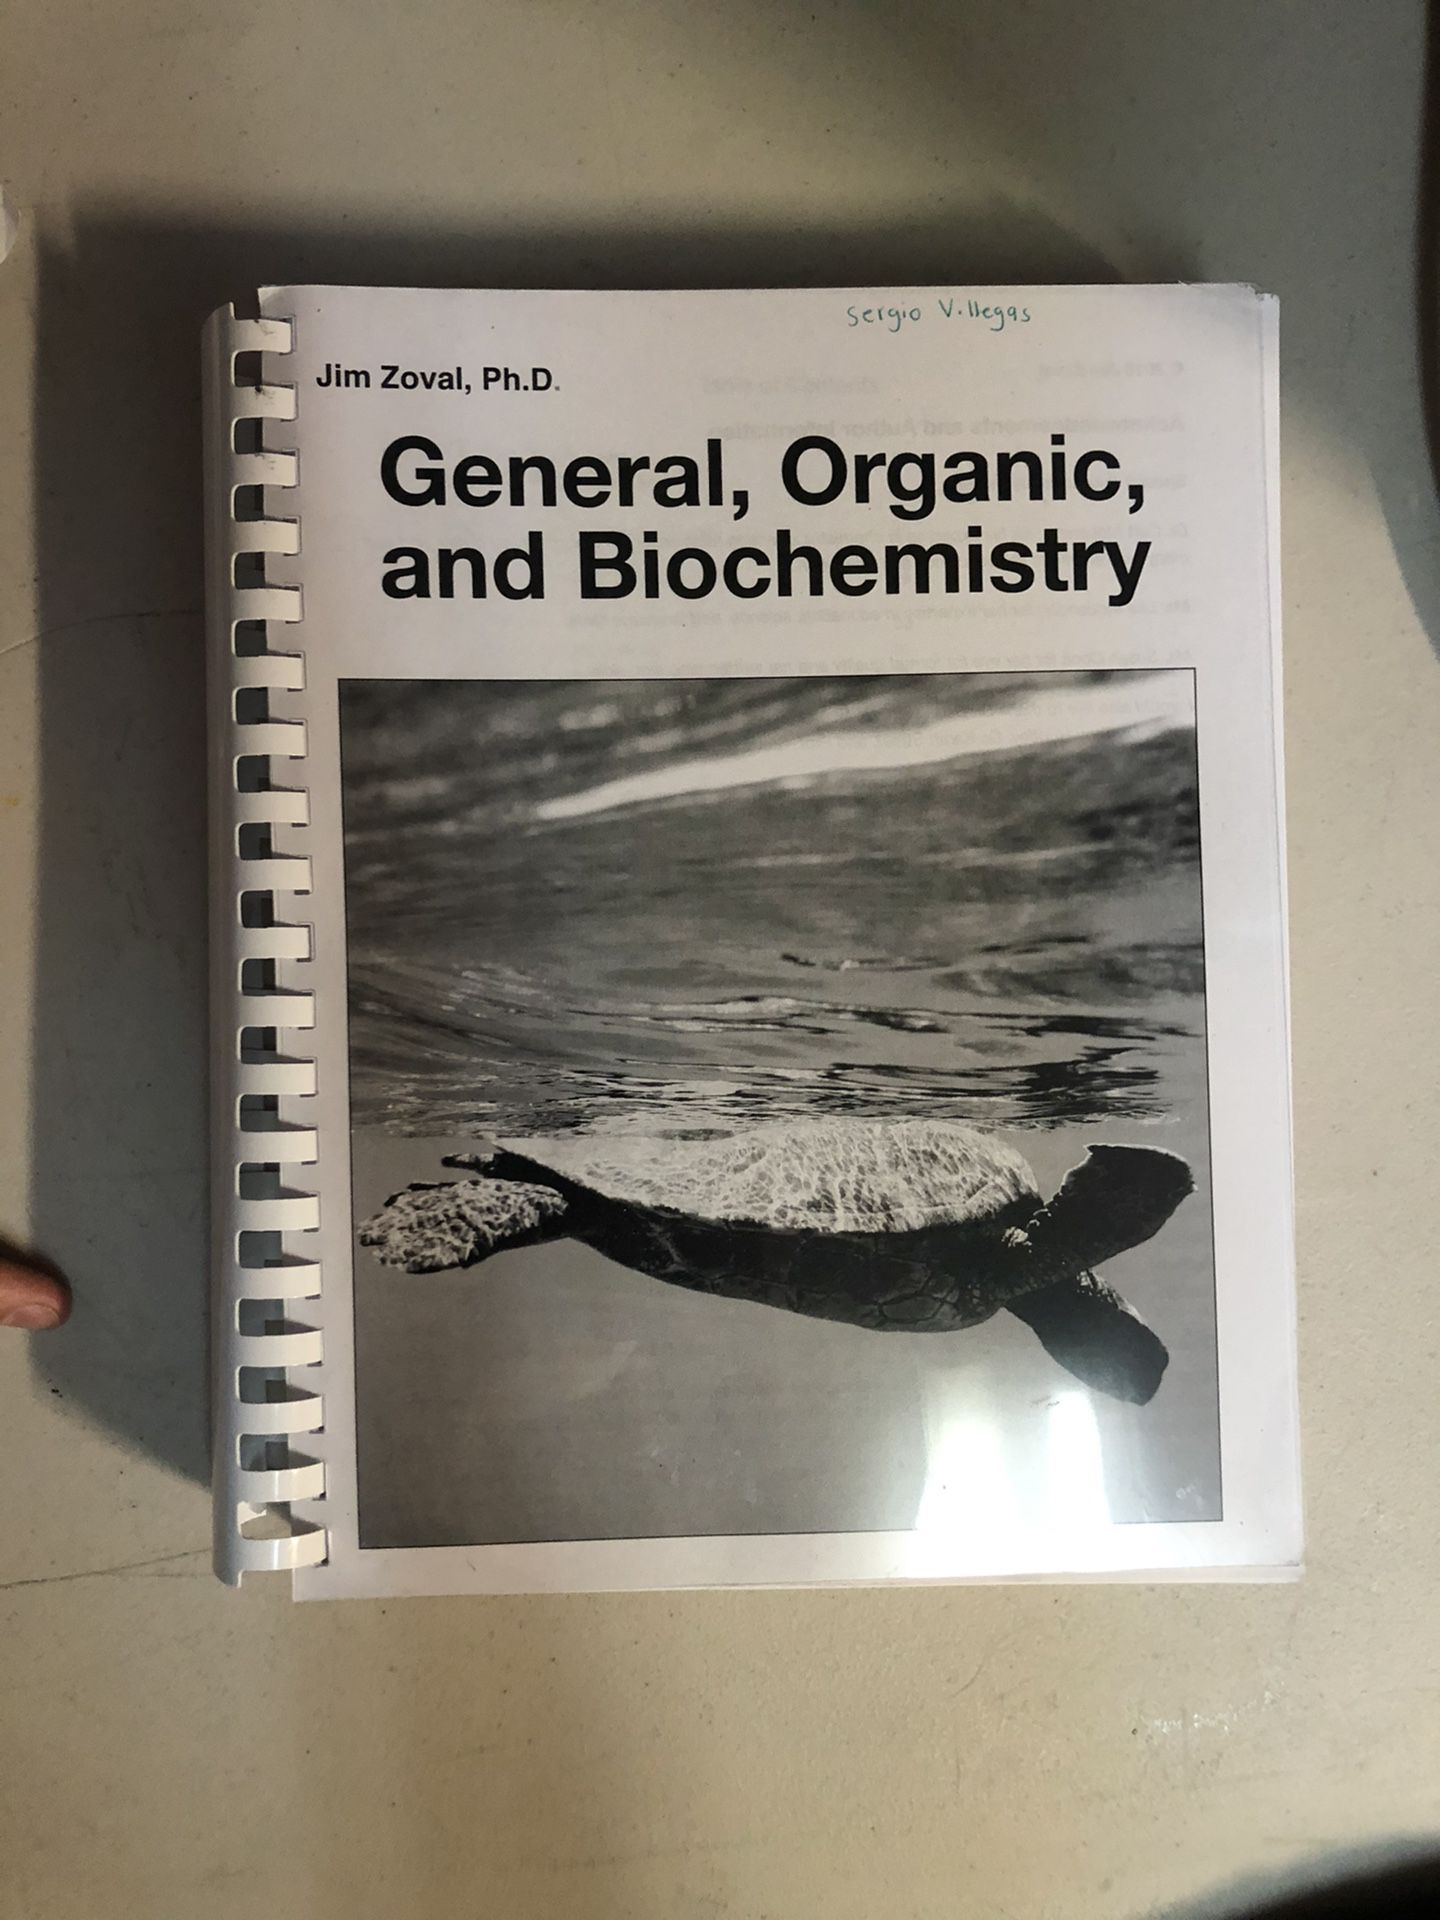 Chem 108 Book